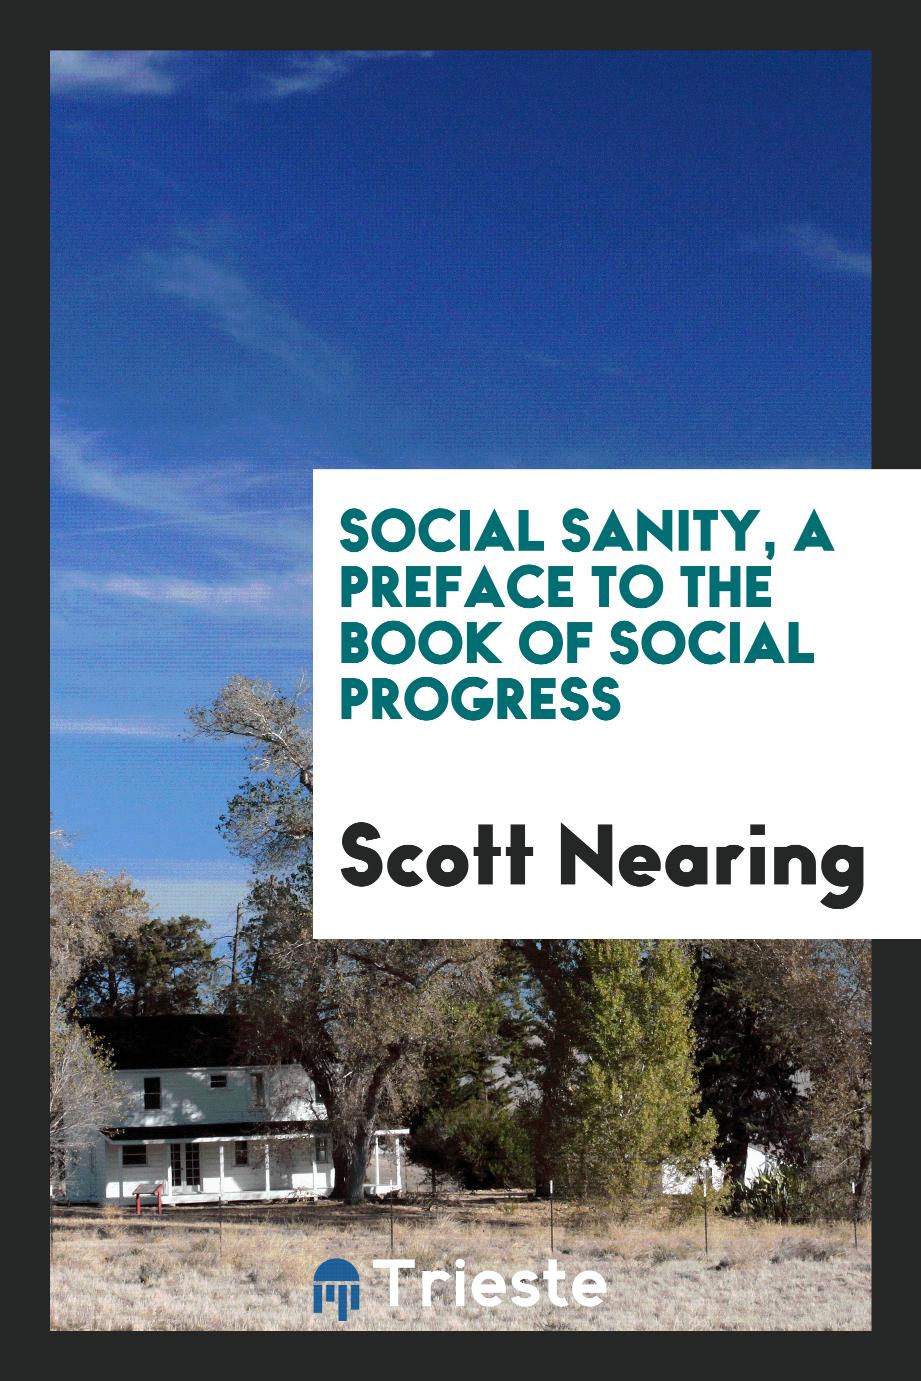 Social sanity, a preface to the book of social progress